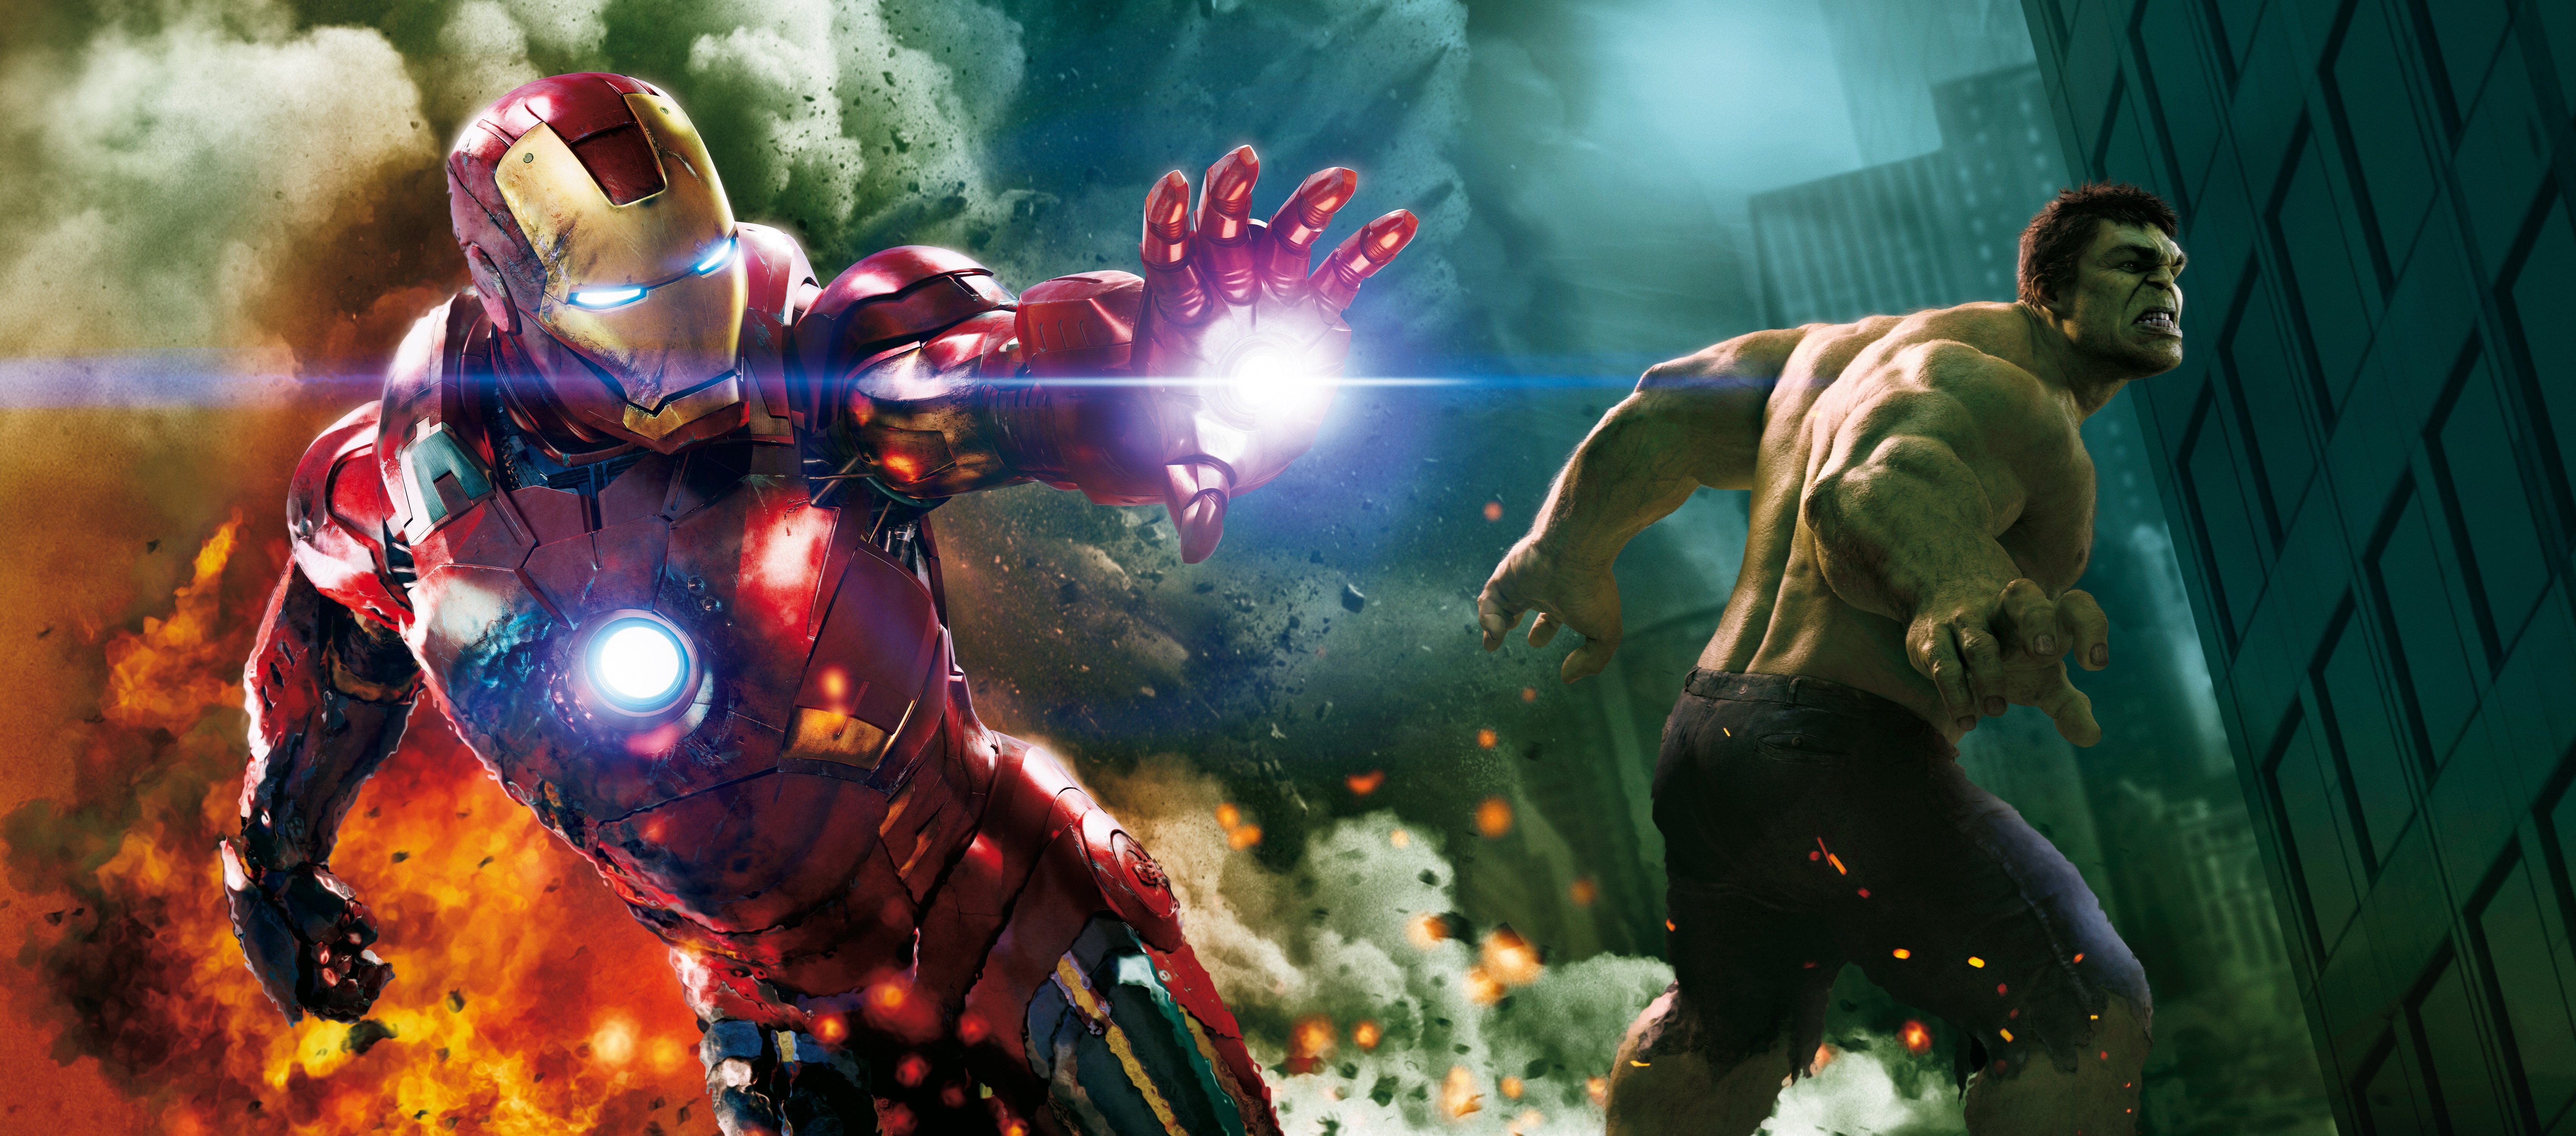 Avengers Movie Hulk And Iron Man Wallpaper